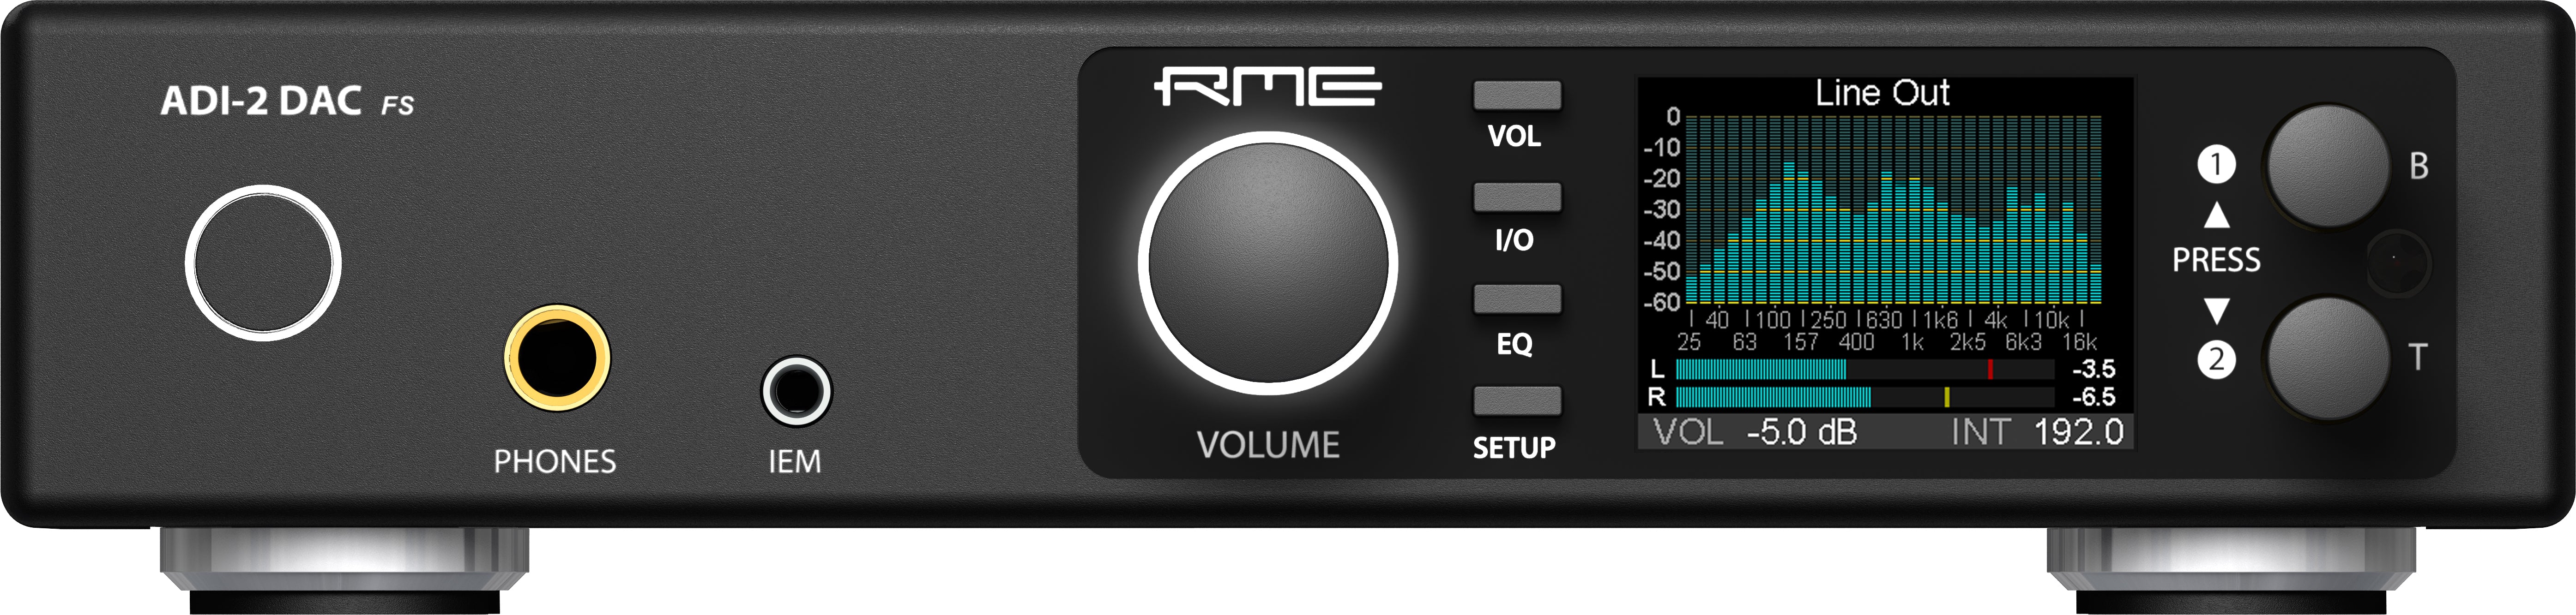 RME ADI-2 DAC FS - Converters - Professional Audio Design, Inc